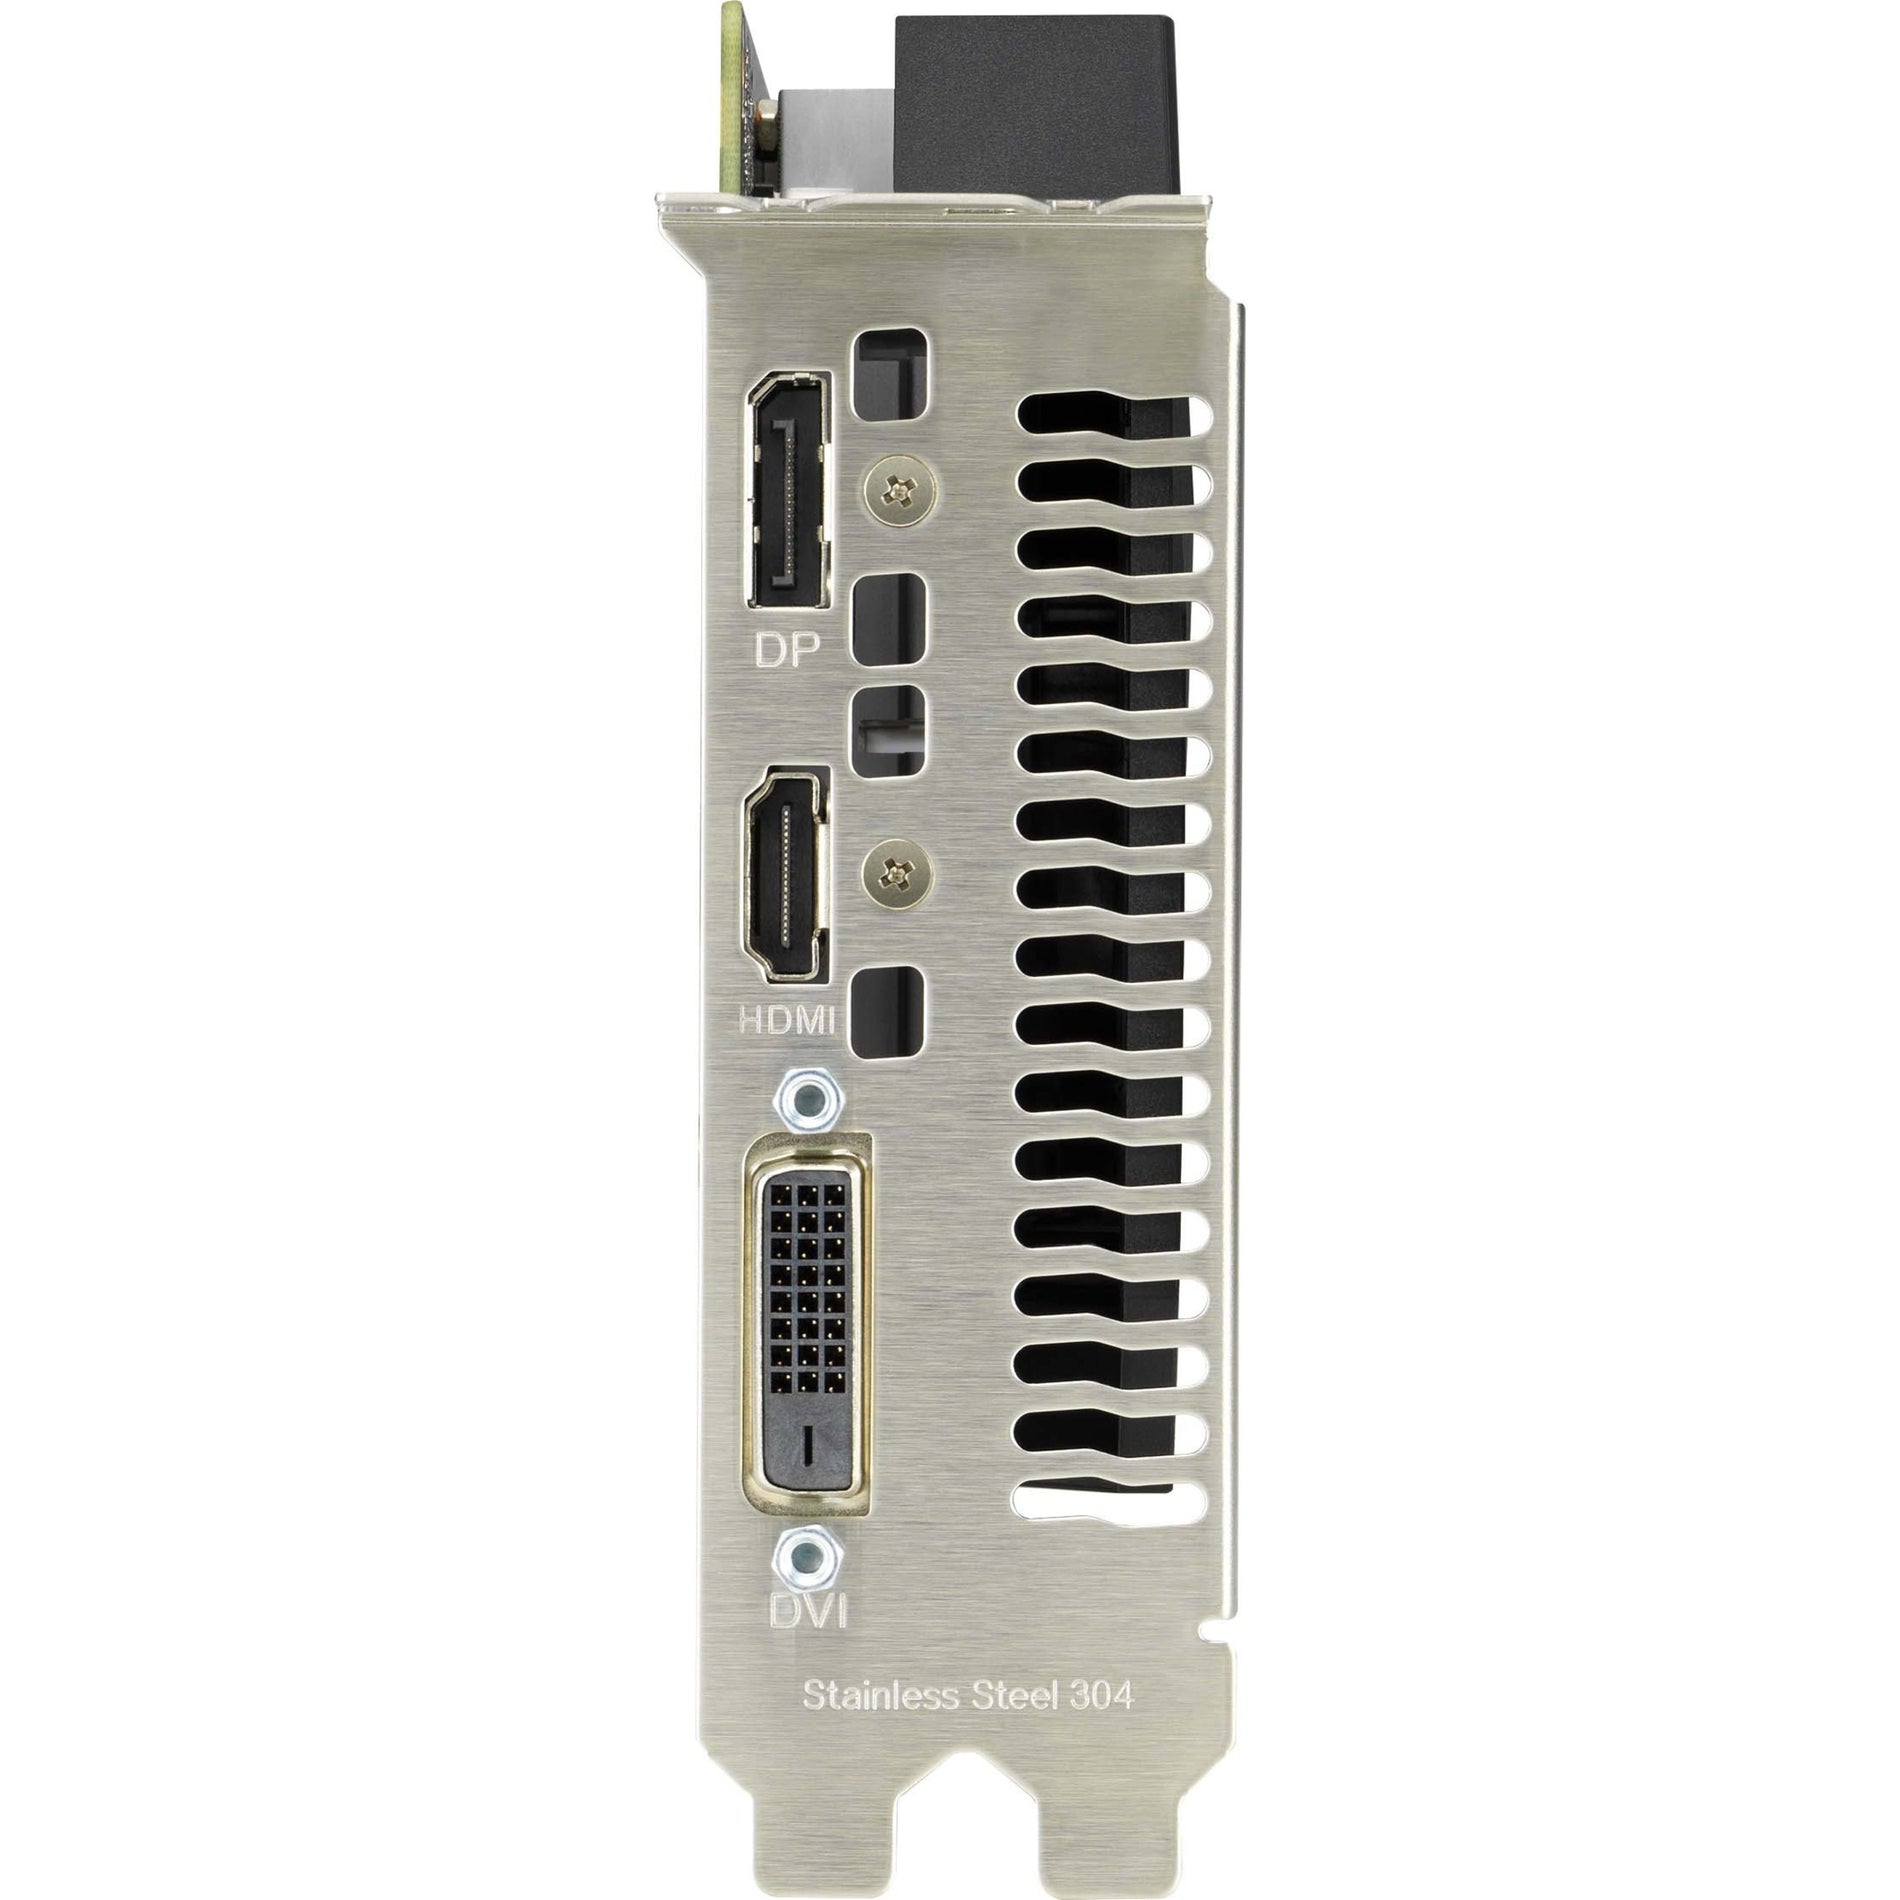 Asus PH-GTX1630-4G Phoenix GeForce GTX 1630 Graphic Card, 4 GB GDDR6, DVI, HDMI, DisplayPort, PCI Express 3.0, 300W Power Supply